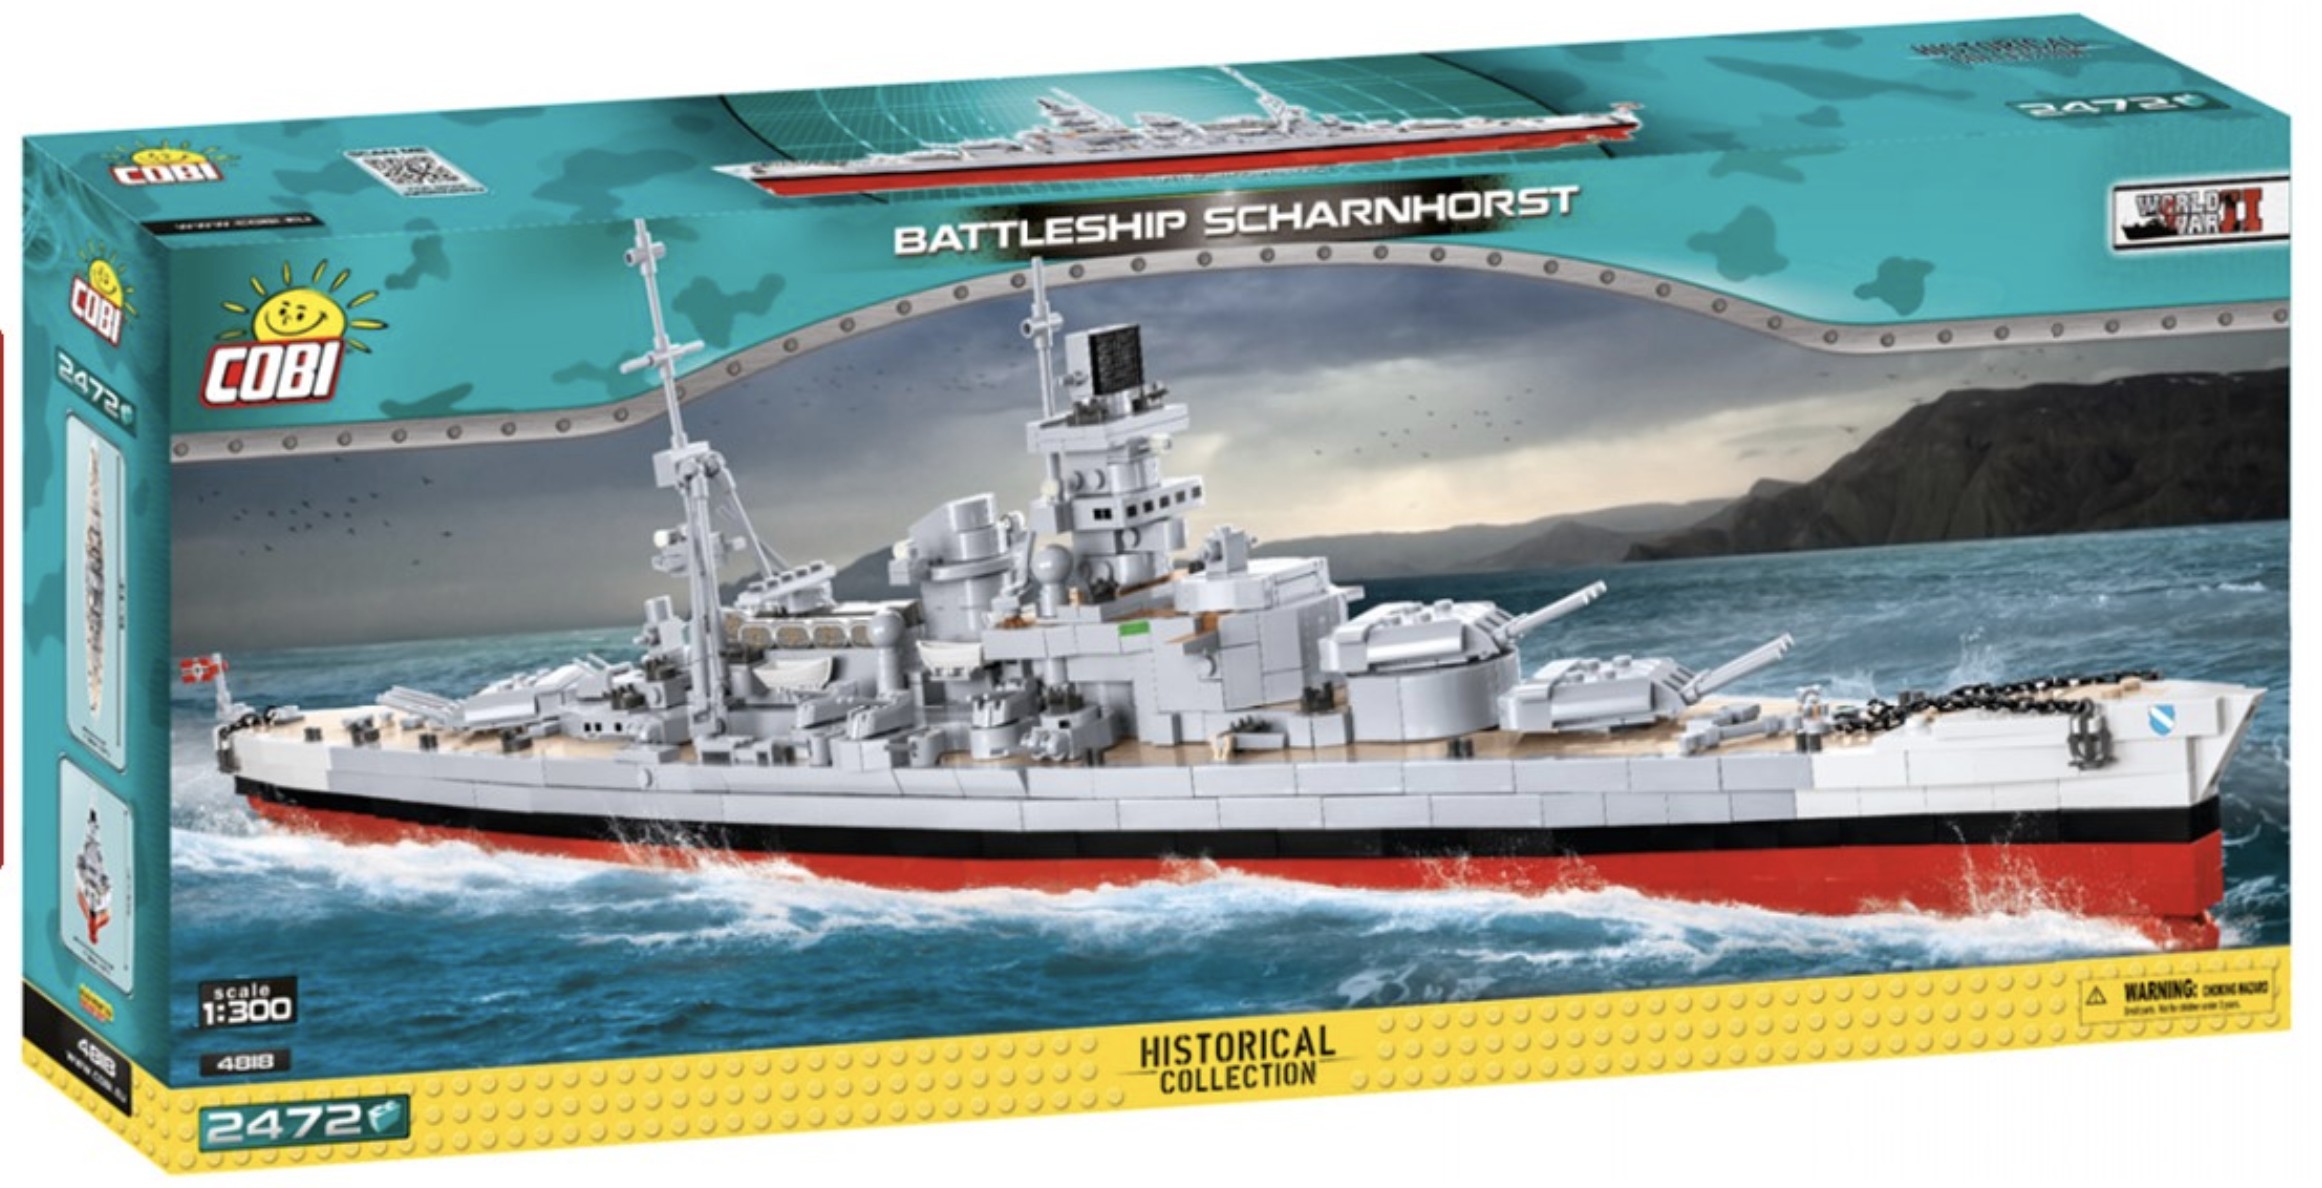 4818 - Battleship Scharnhorst